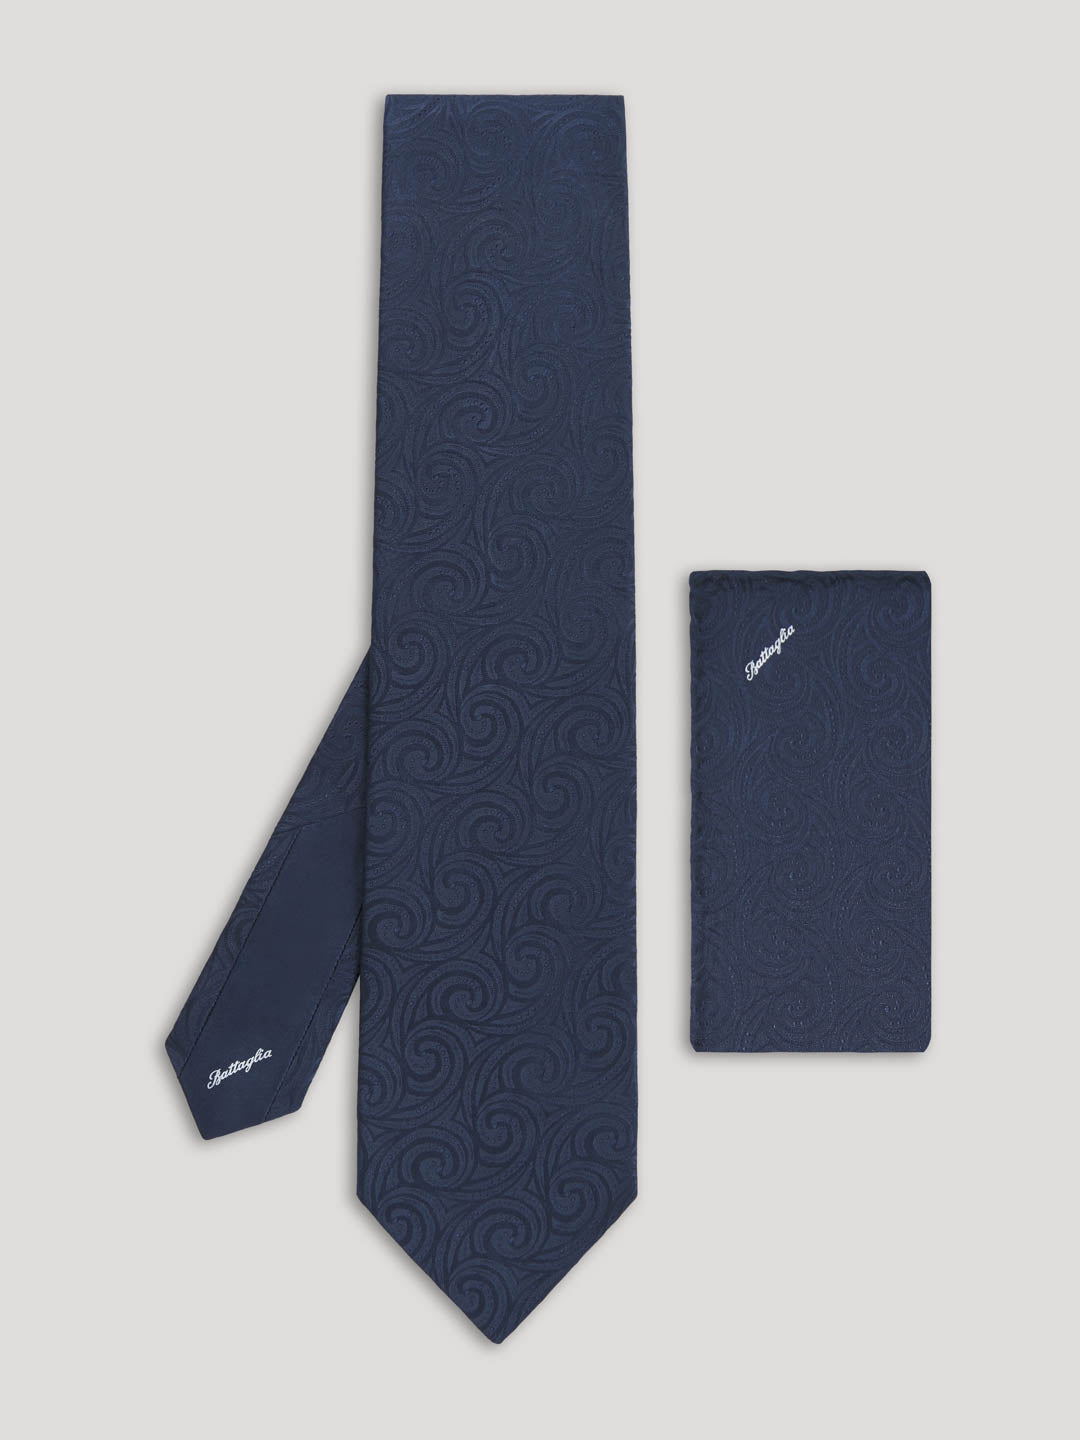 Blue silk tie with handkerchief. 